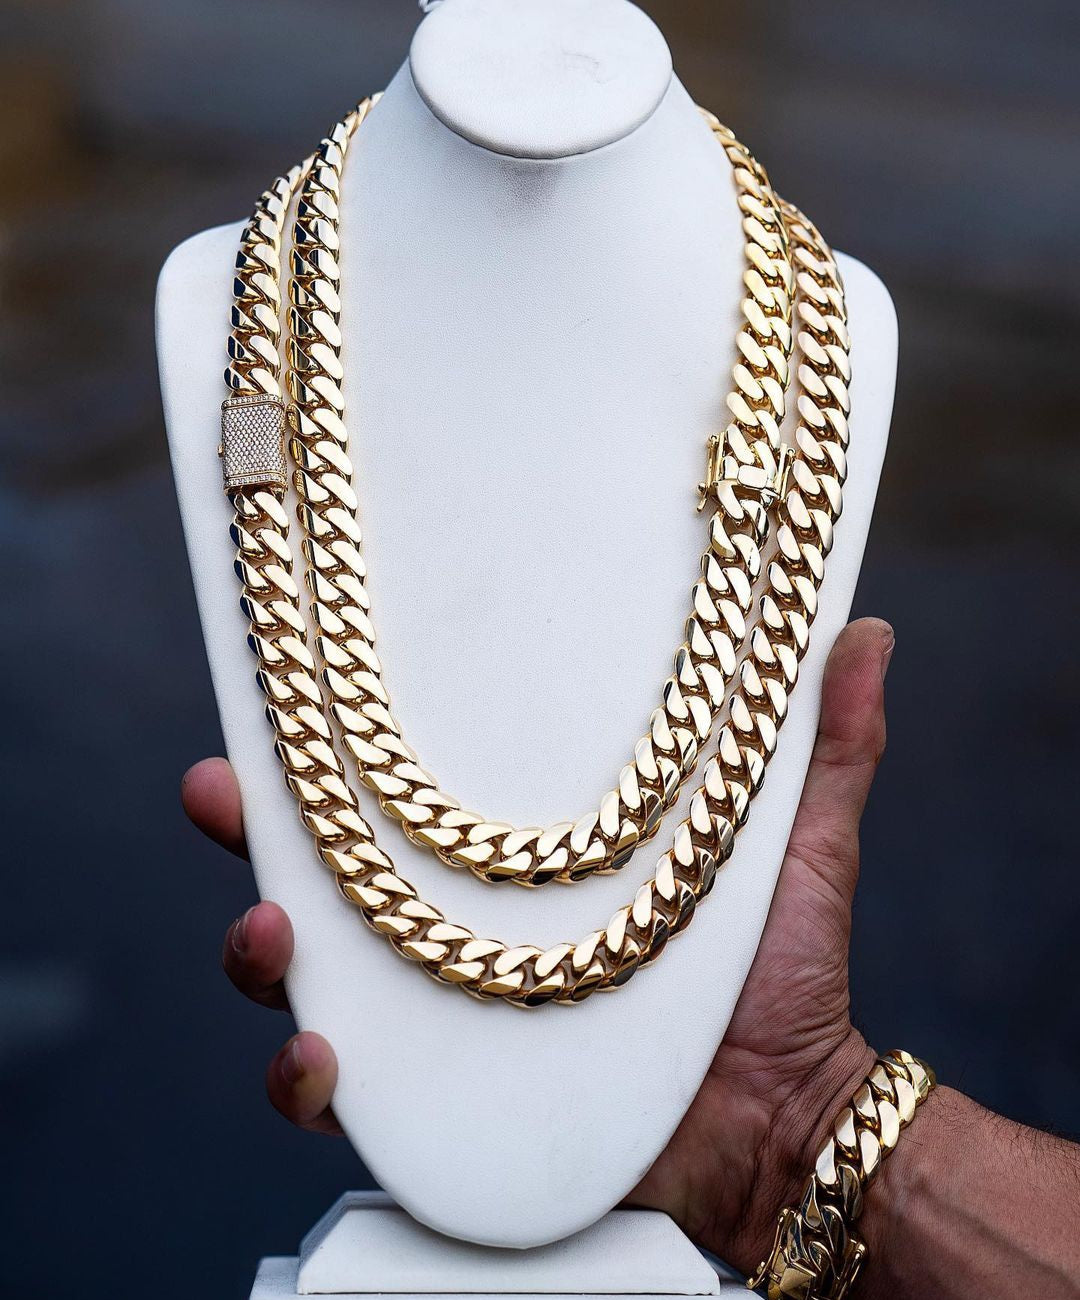 Rare Prince Chain Necklace